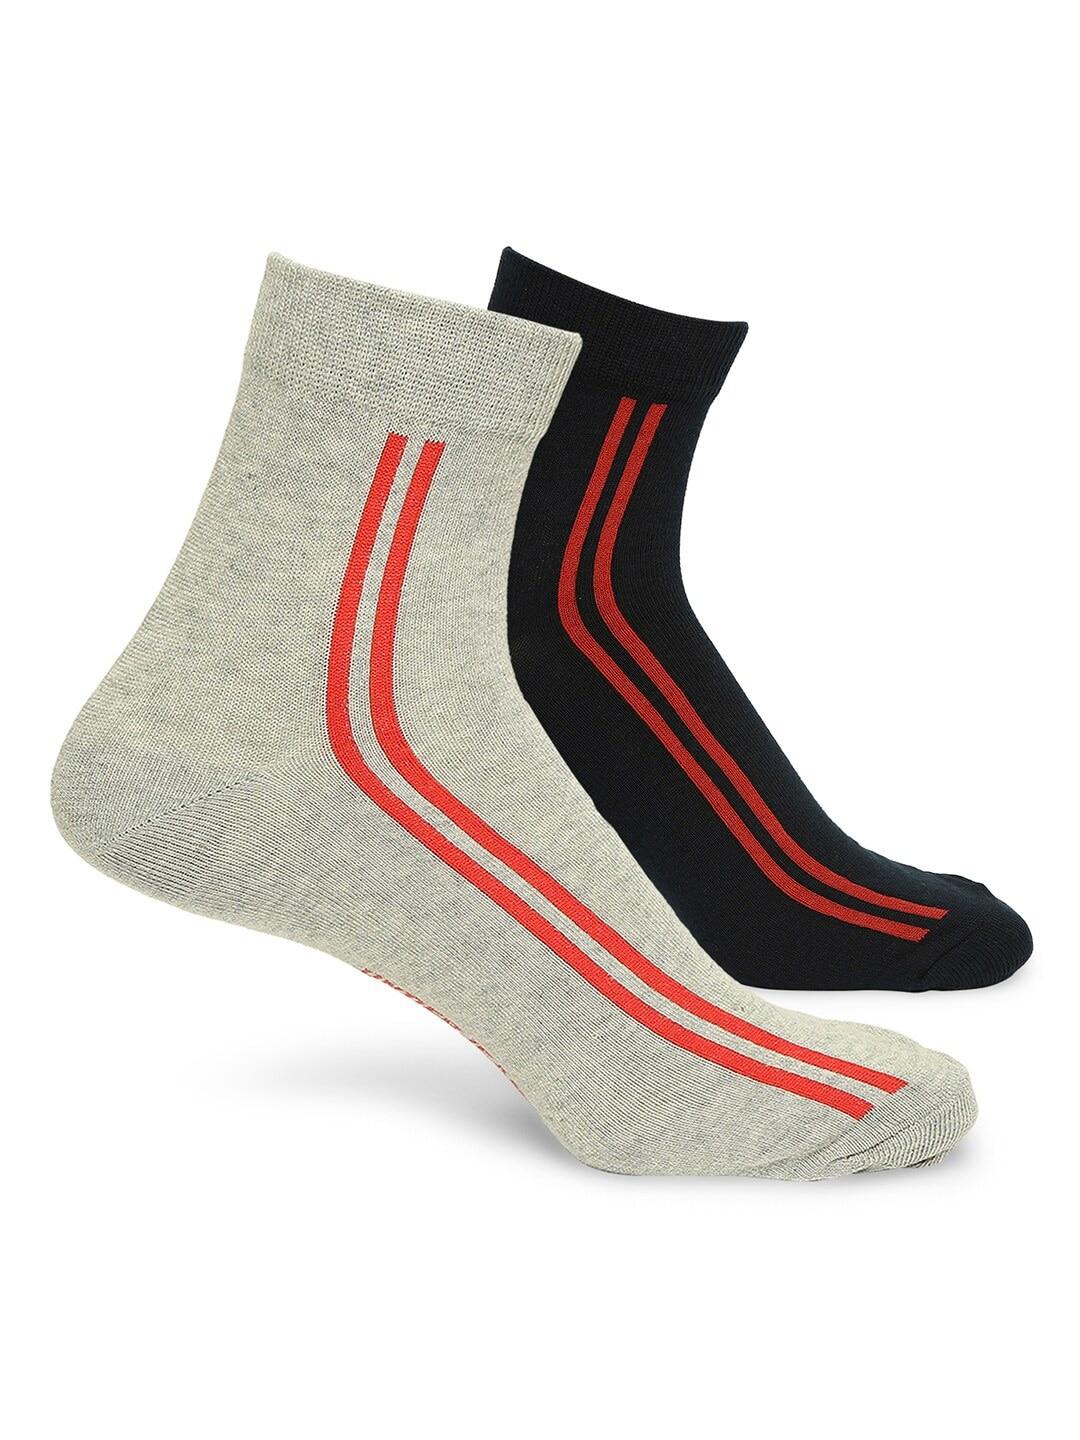 underjeans-by-spykar-men-pack-of-2-cotton-ankle-length-socks